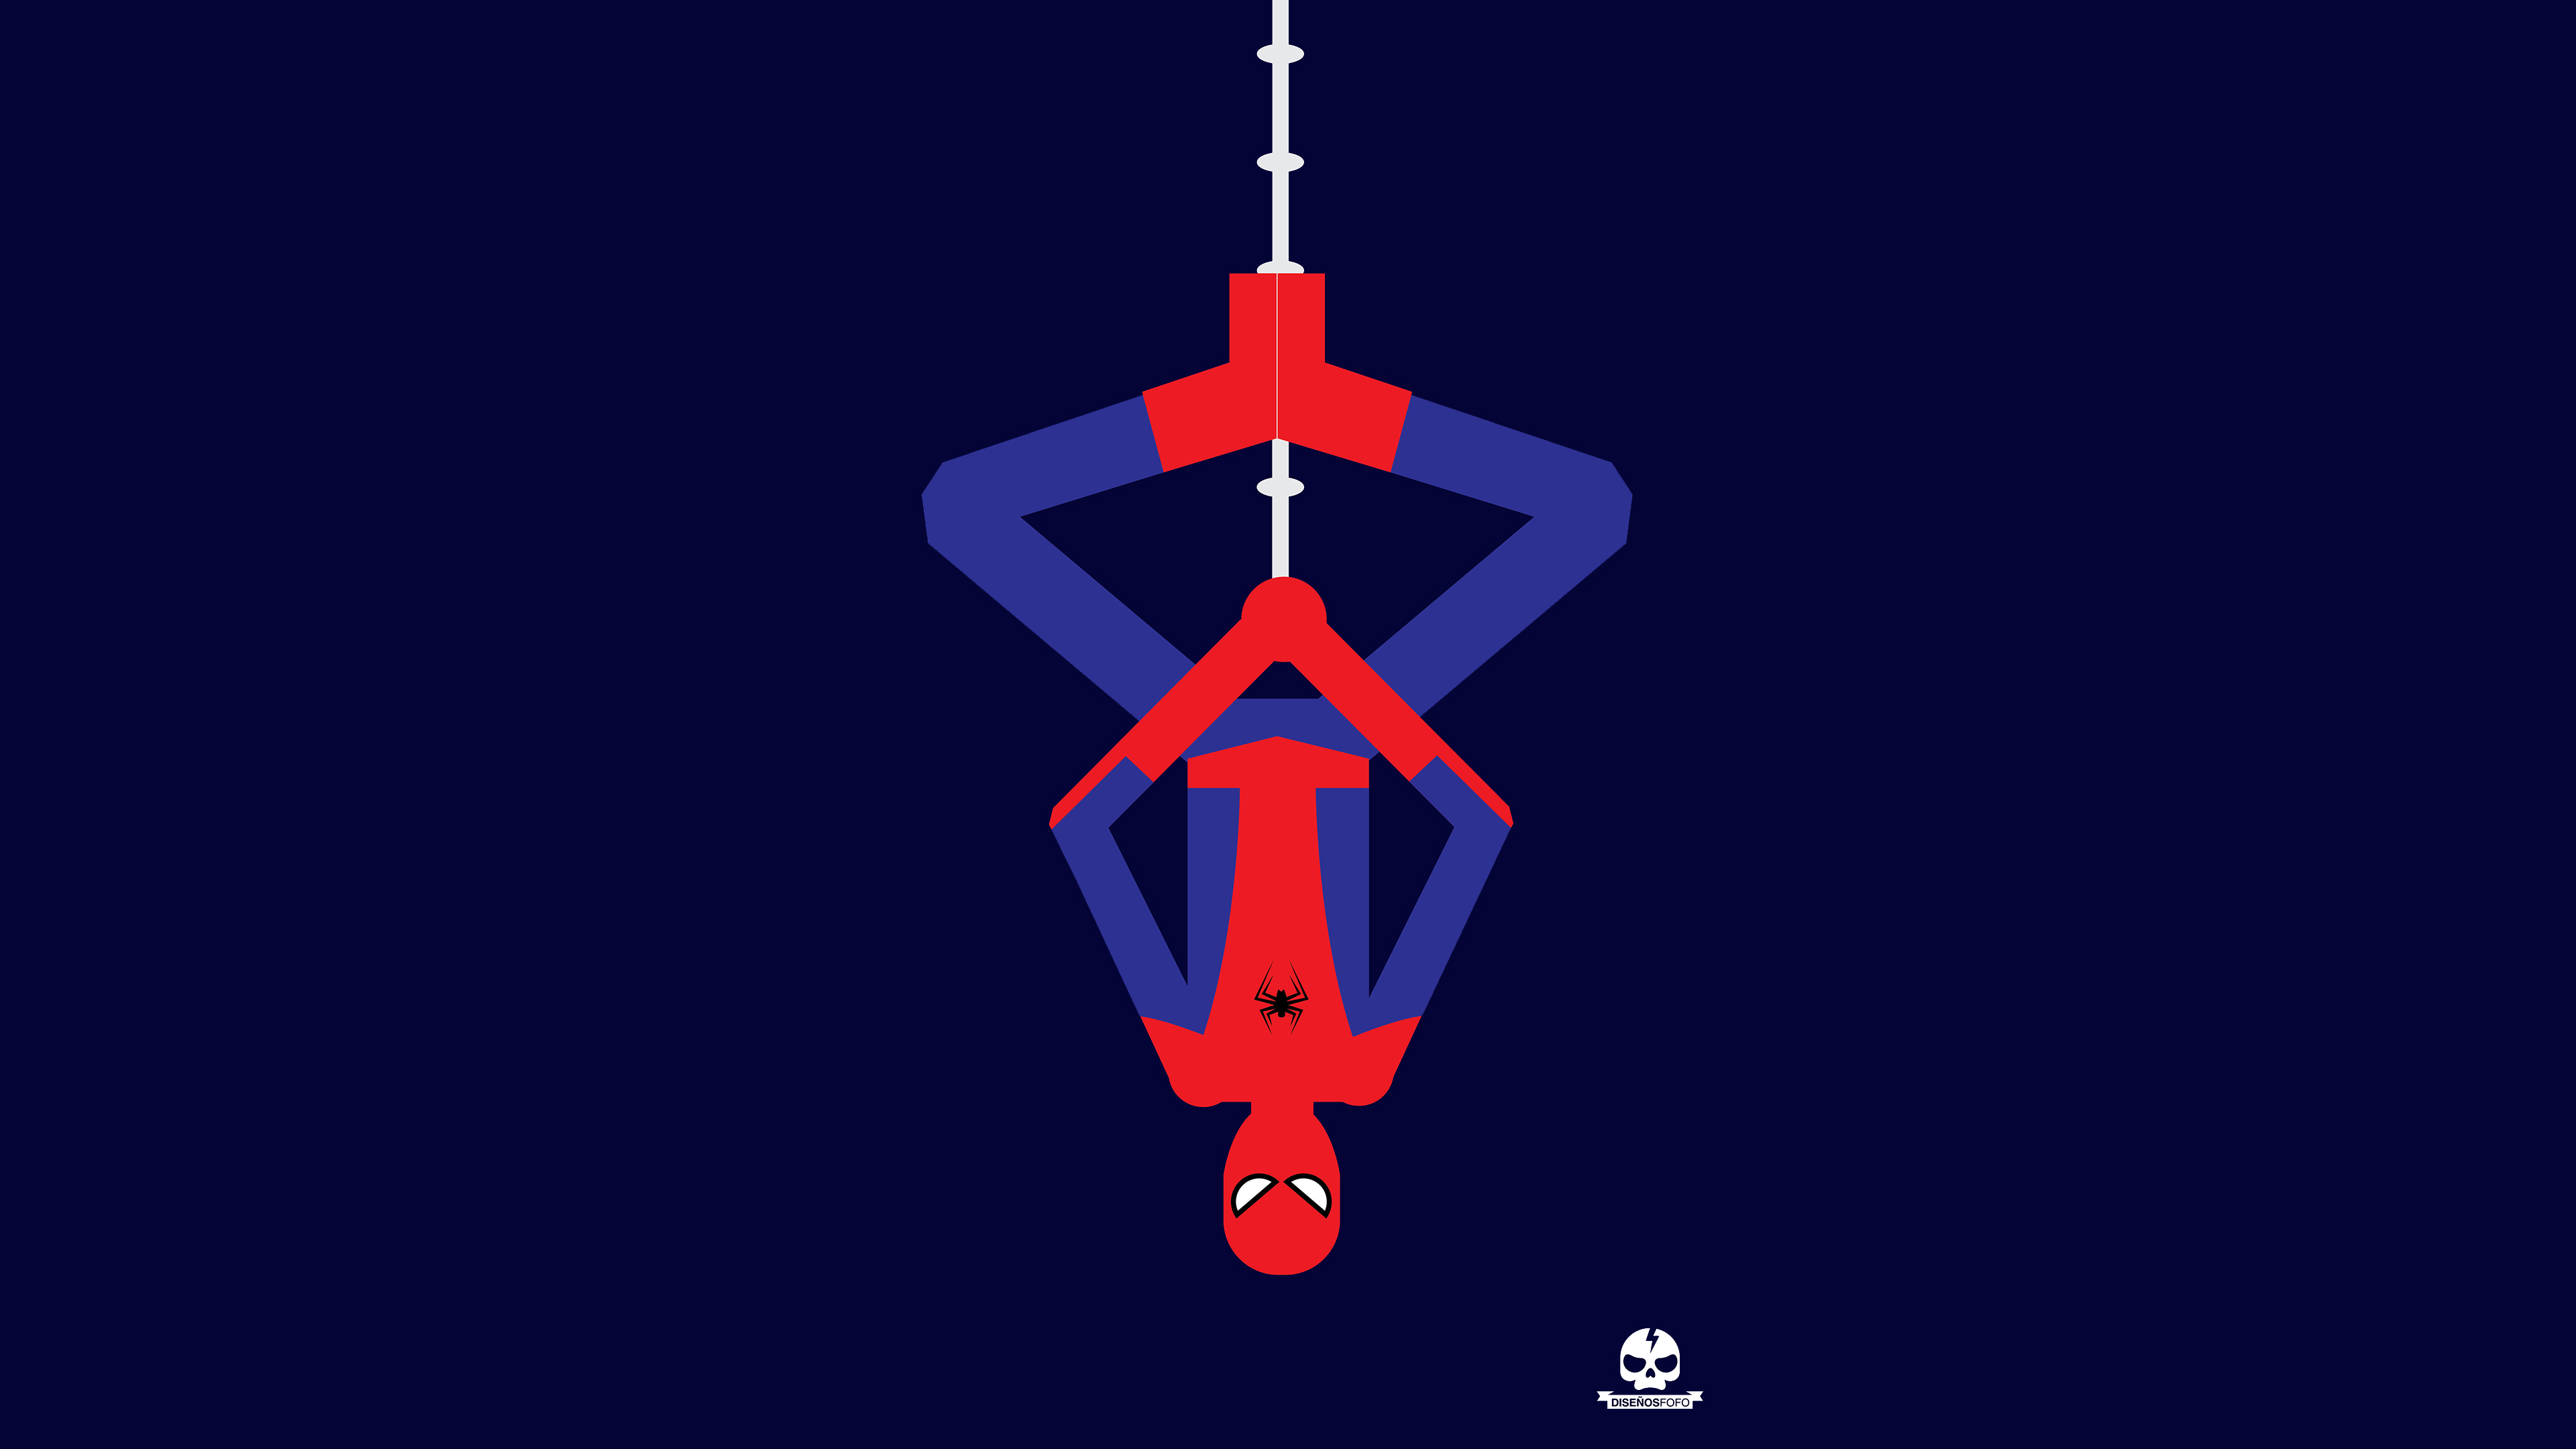 🔥 Free Download Wallpaper 4k Spiderman Upside Down Minimalism 4k Wallpaper [3840x2160] For Your